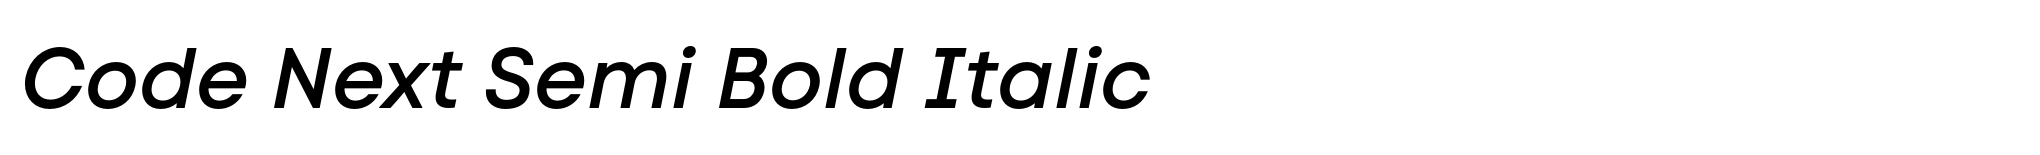 Code Next Semi Bold Italic image